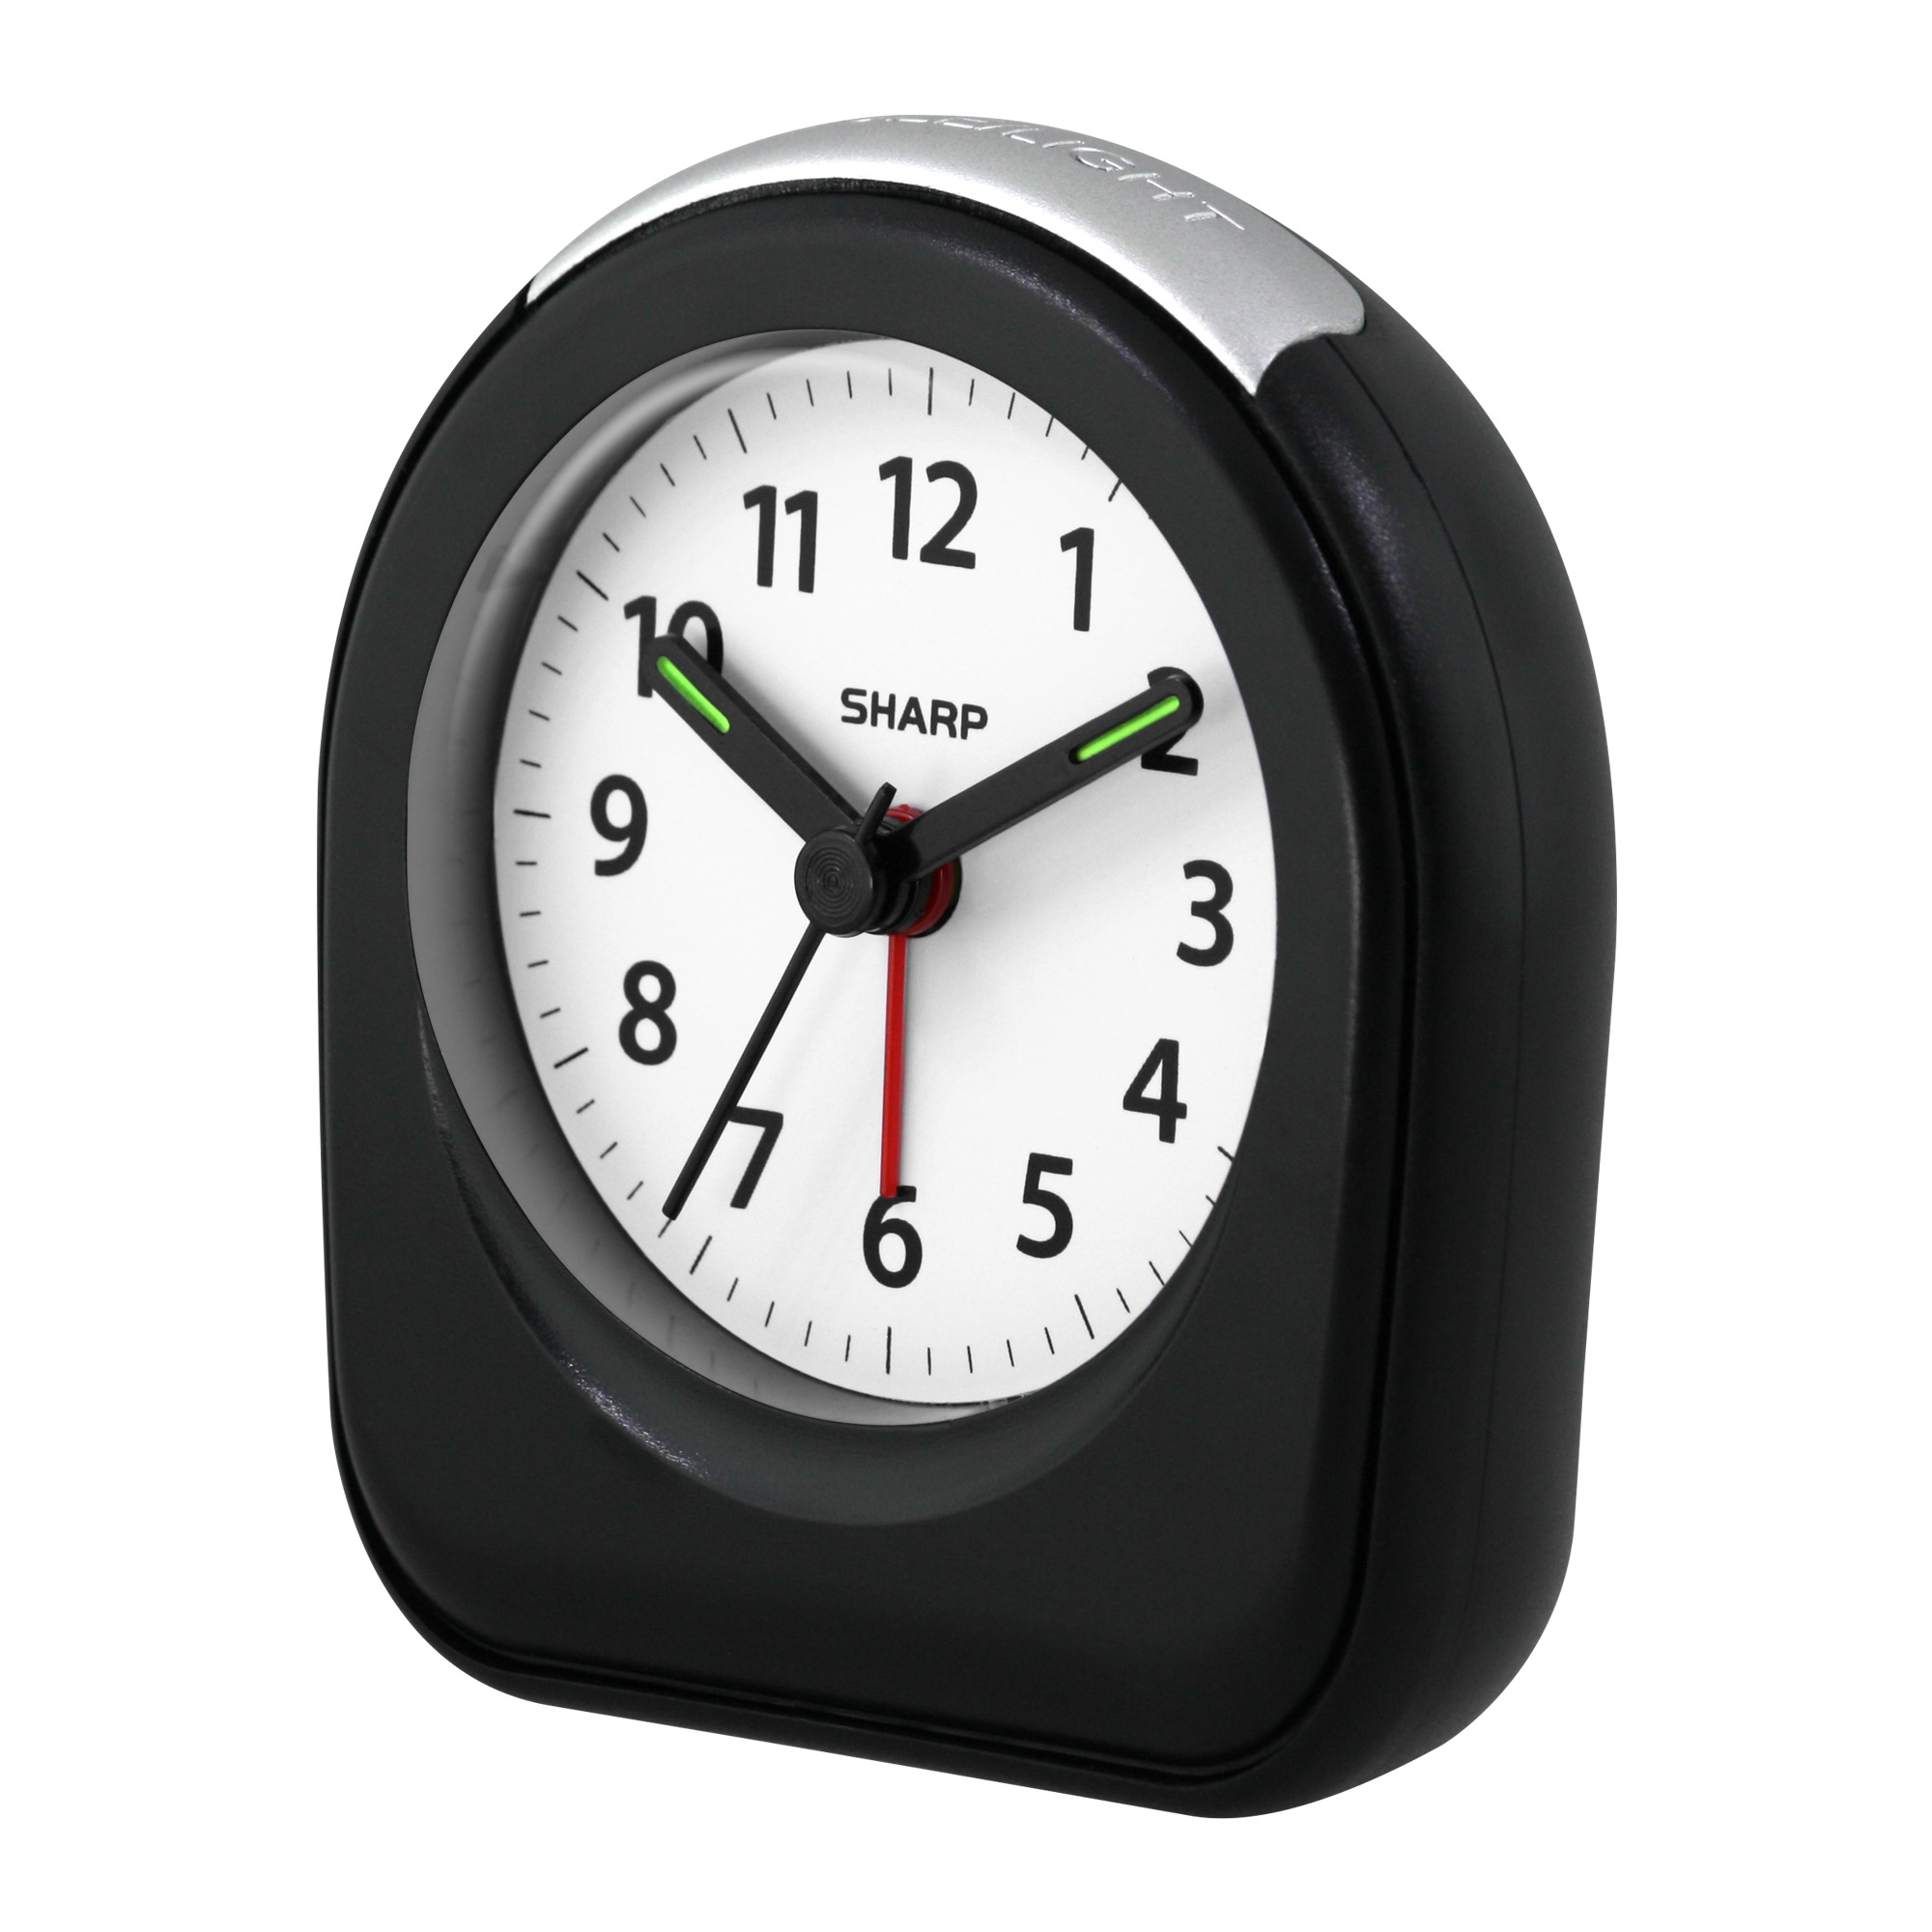 SHARP Quartz Analog Arch Alarm Clock, Black, Battery Operated, Small, Travel Clock - image 5 of 6